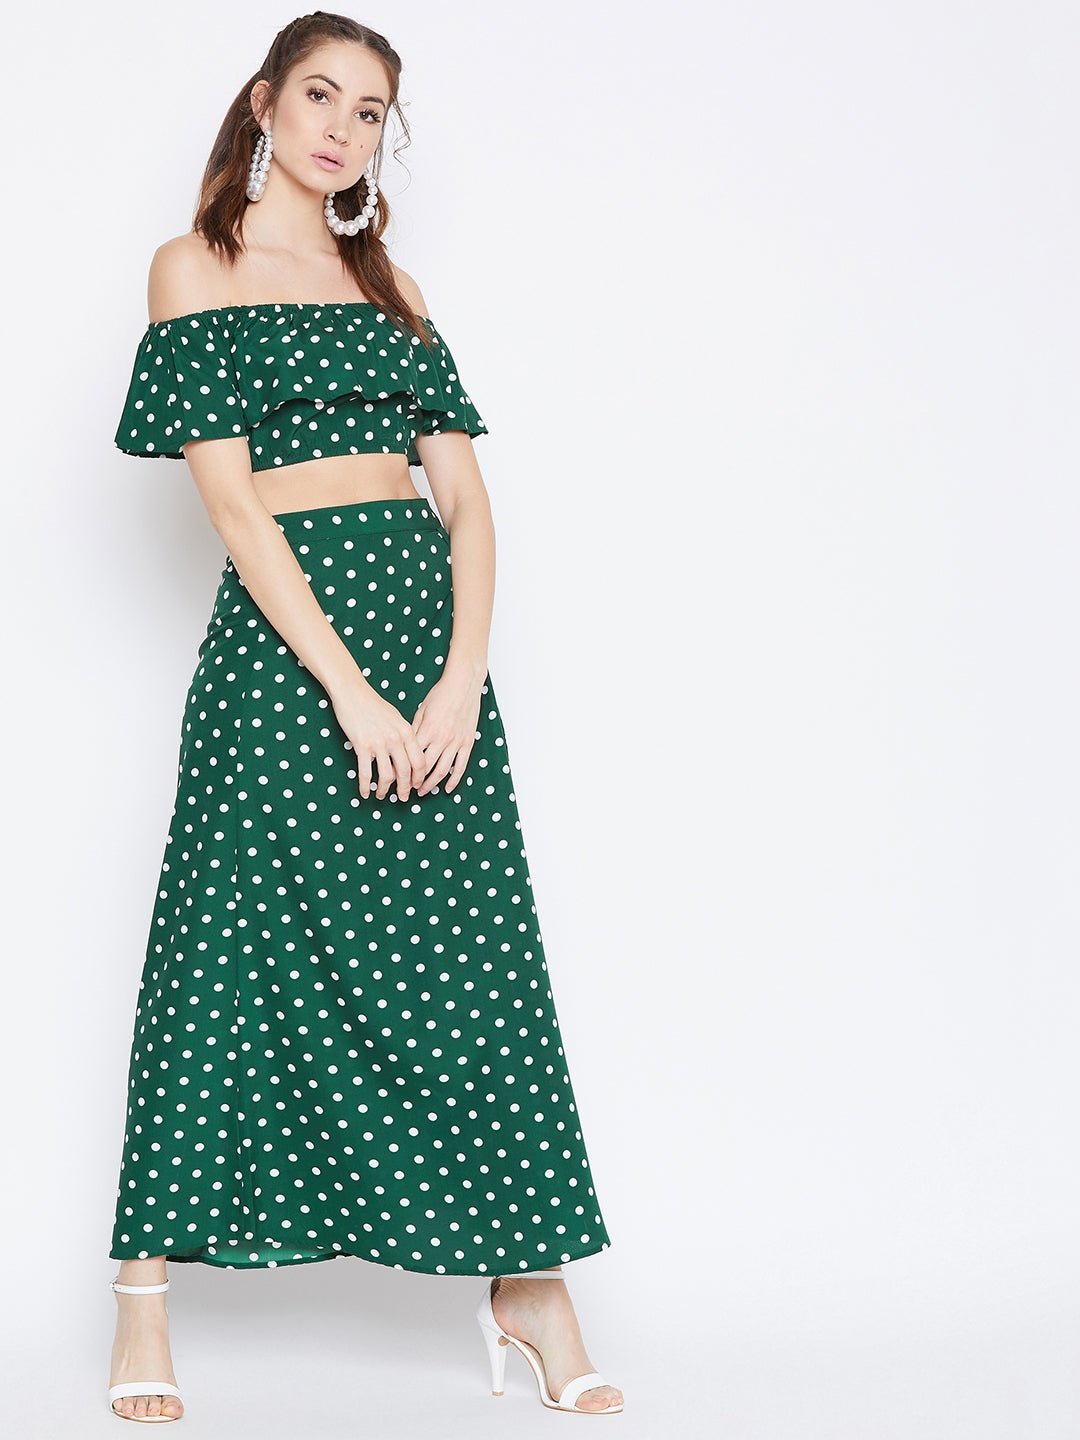 Folk Republic Women Green & White Polka Dot Printed Off-Shoulder Co-Ordinate Maxi Dress - #folk republic#